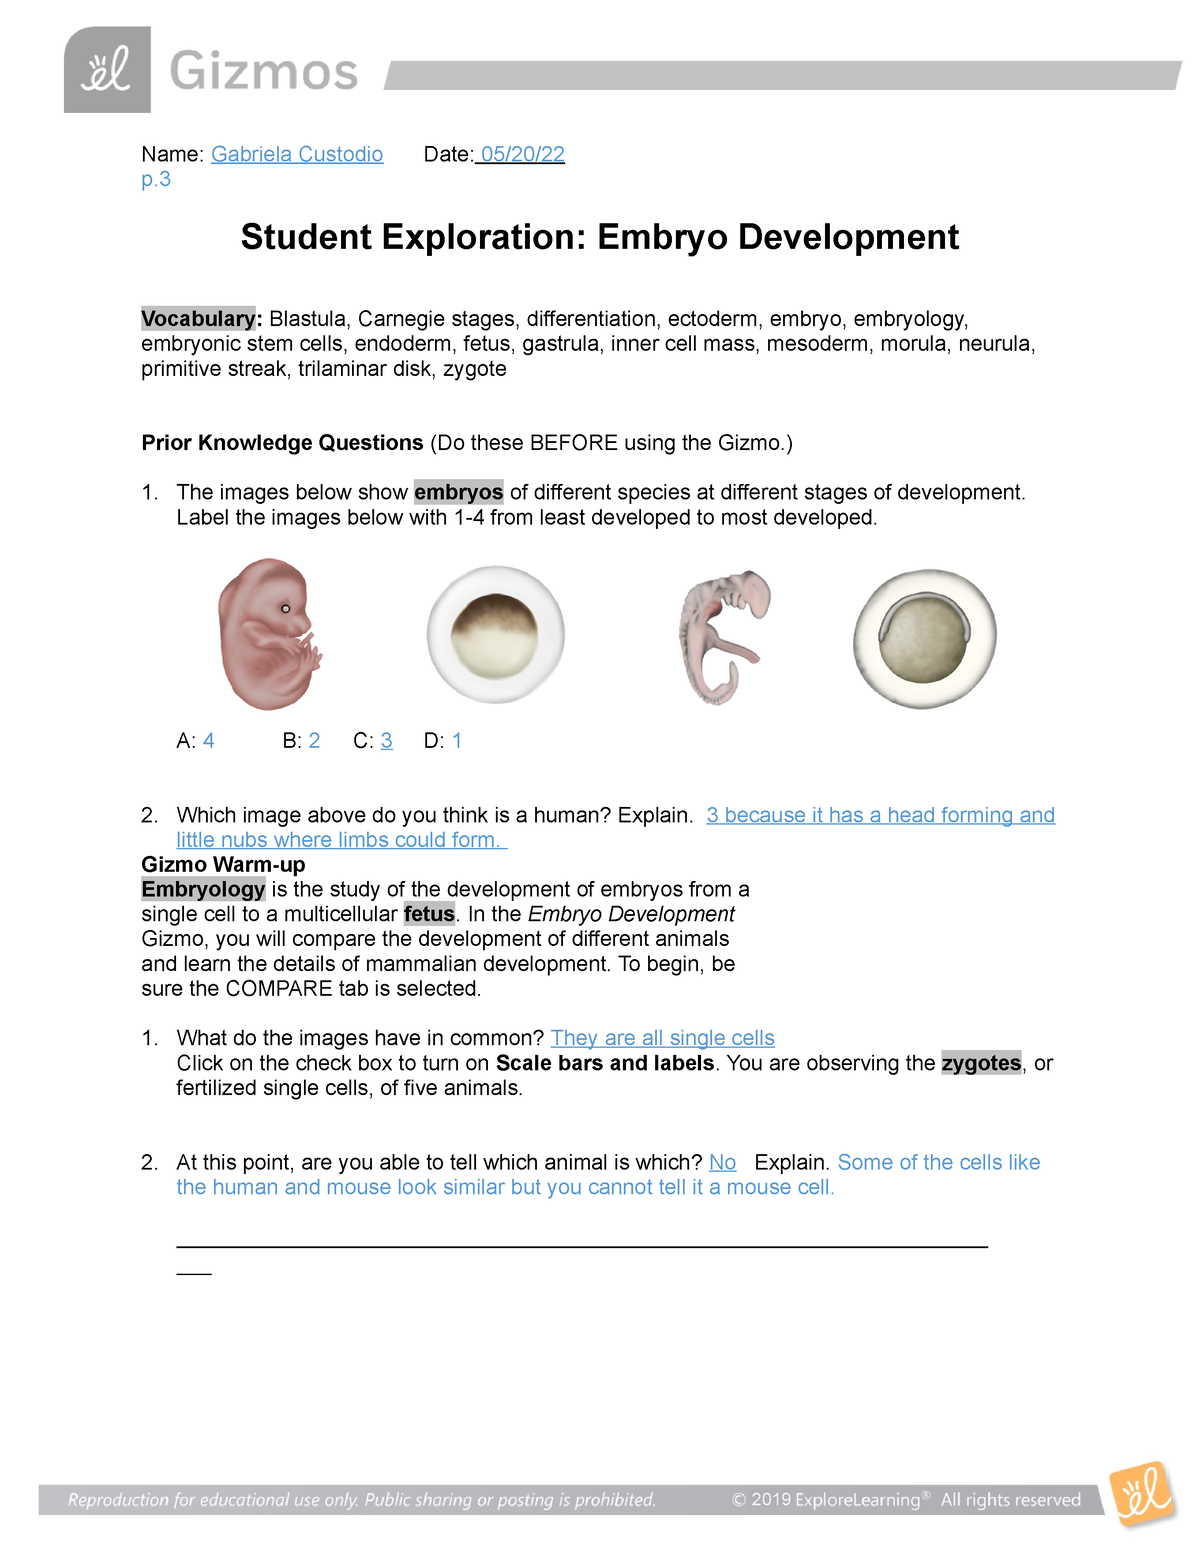 animal fetus development